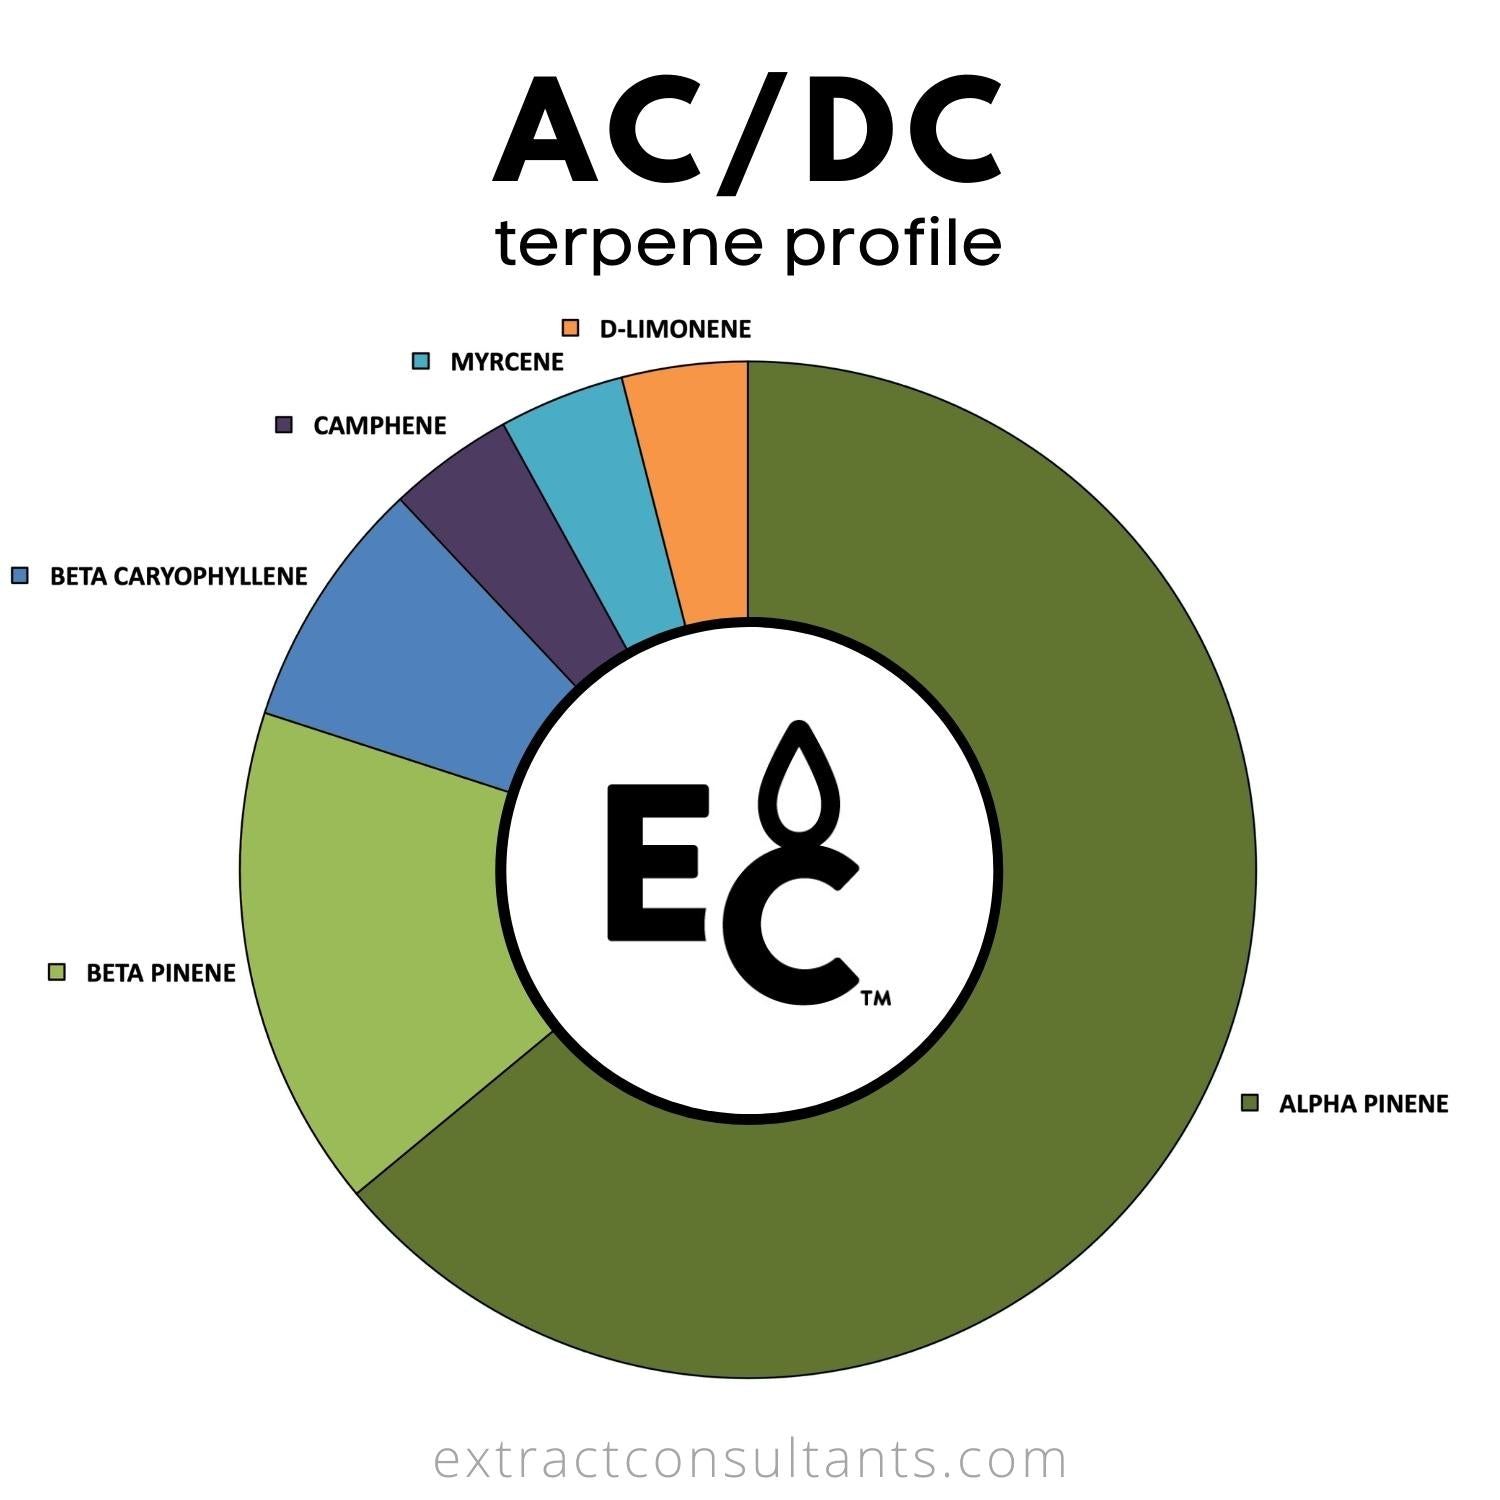 ACDC terpene profile